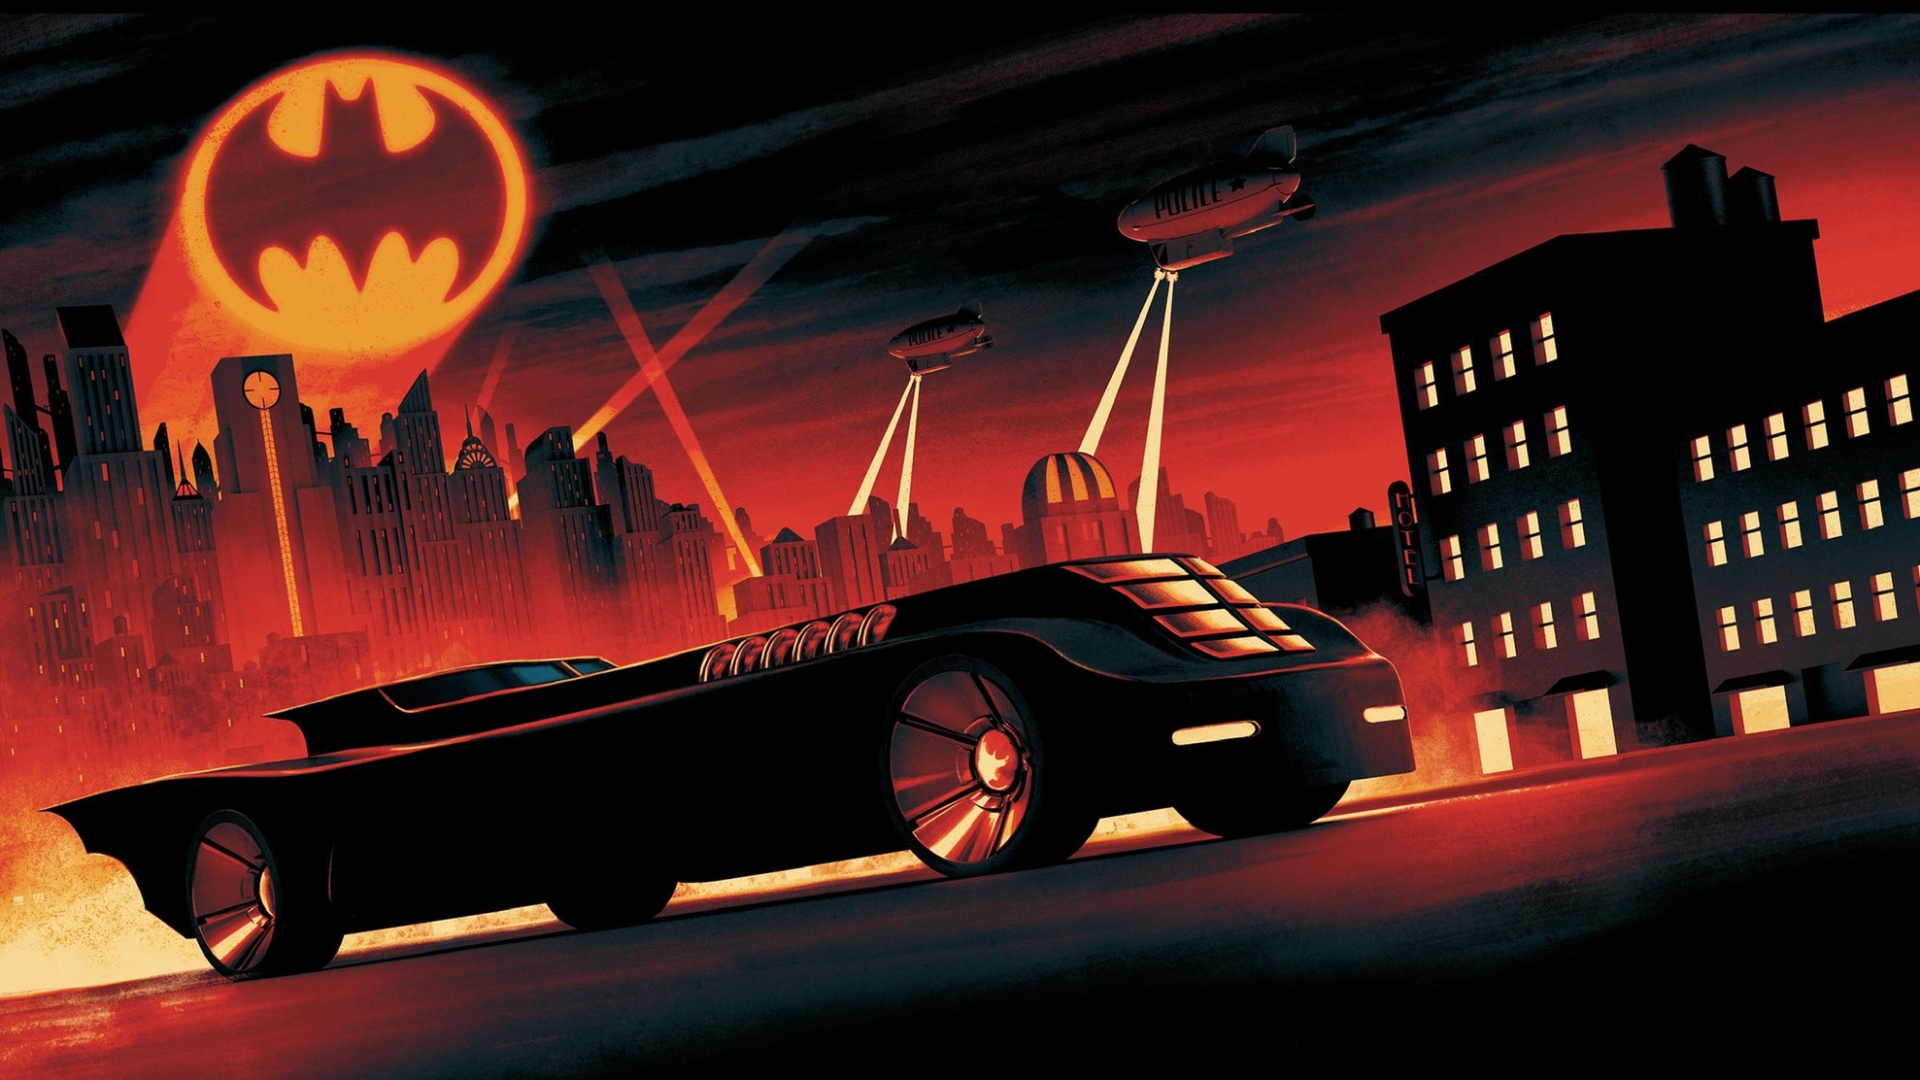 General 1920x1080 Batman Batmobile Gotham City Batman logo vehicle city lights building superhero